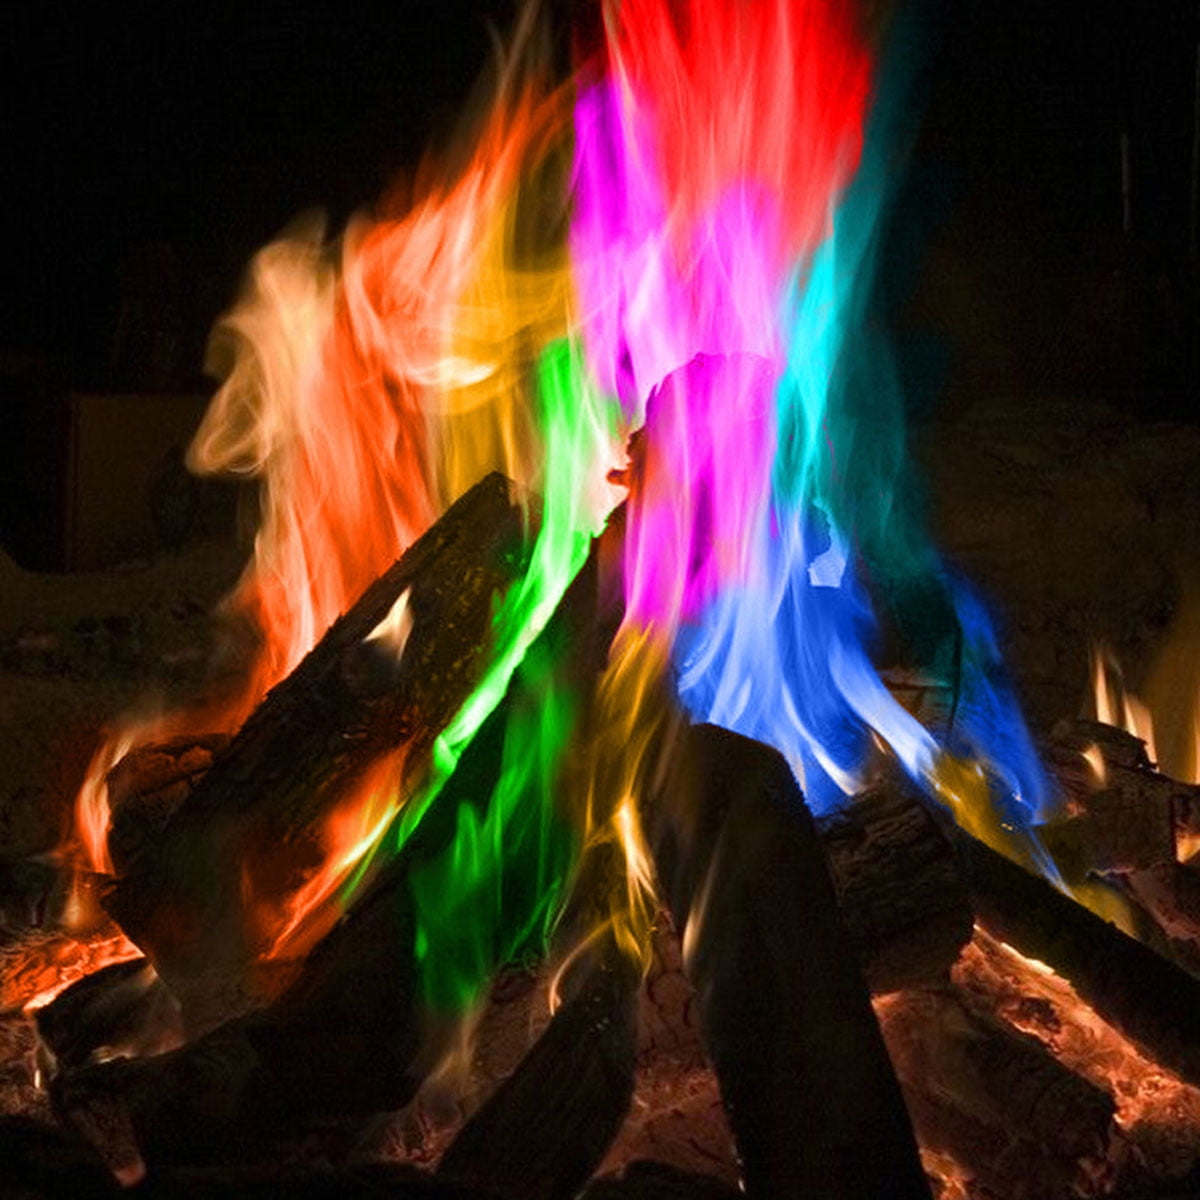 25g Mystic Fire Magic Tricks Colorful Flames Toy Game Bonfire Powder X9O3 F 